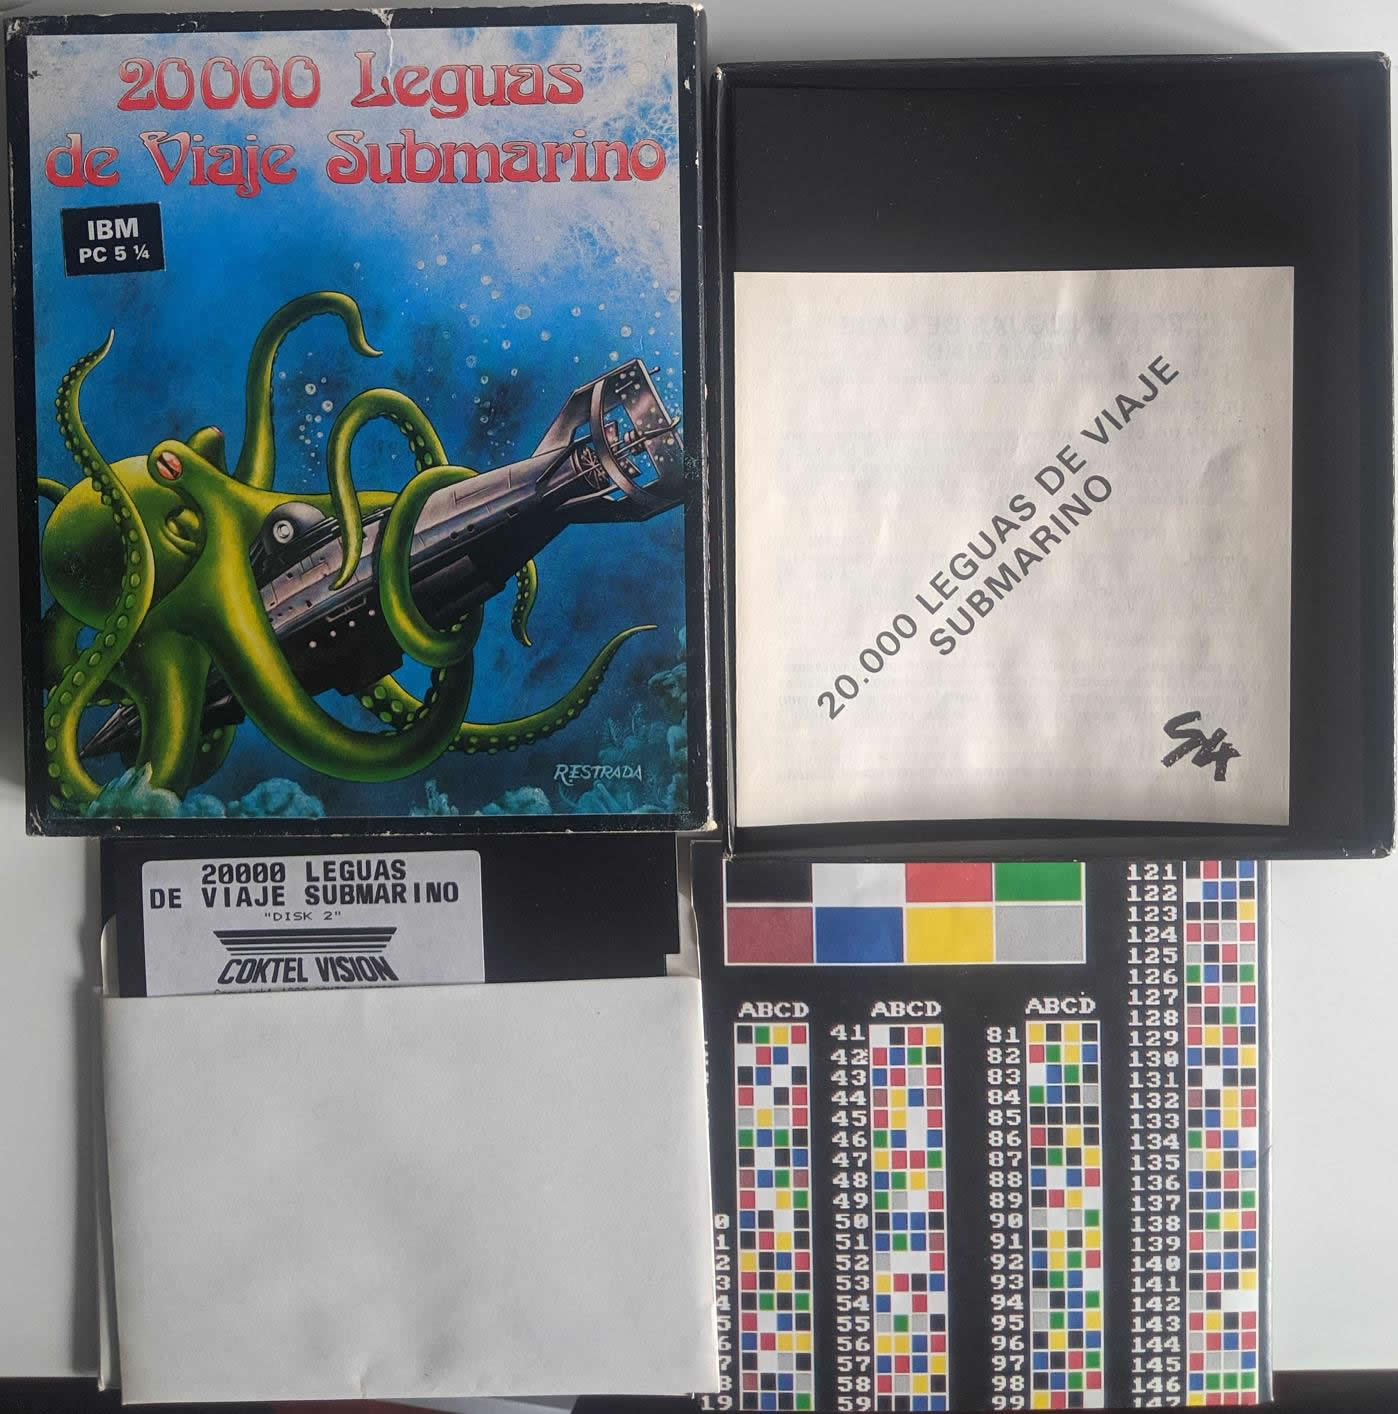 20.000 Leguas de Viaje Submarino (1988, Coktel Vision) - Contenido.jpg